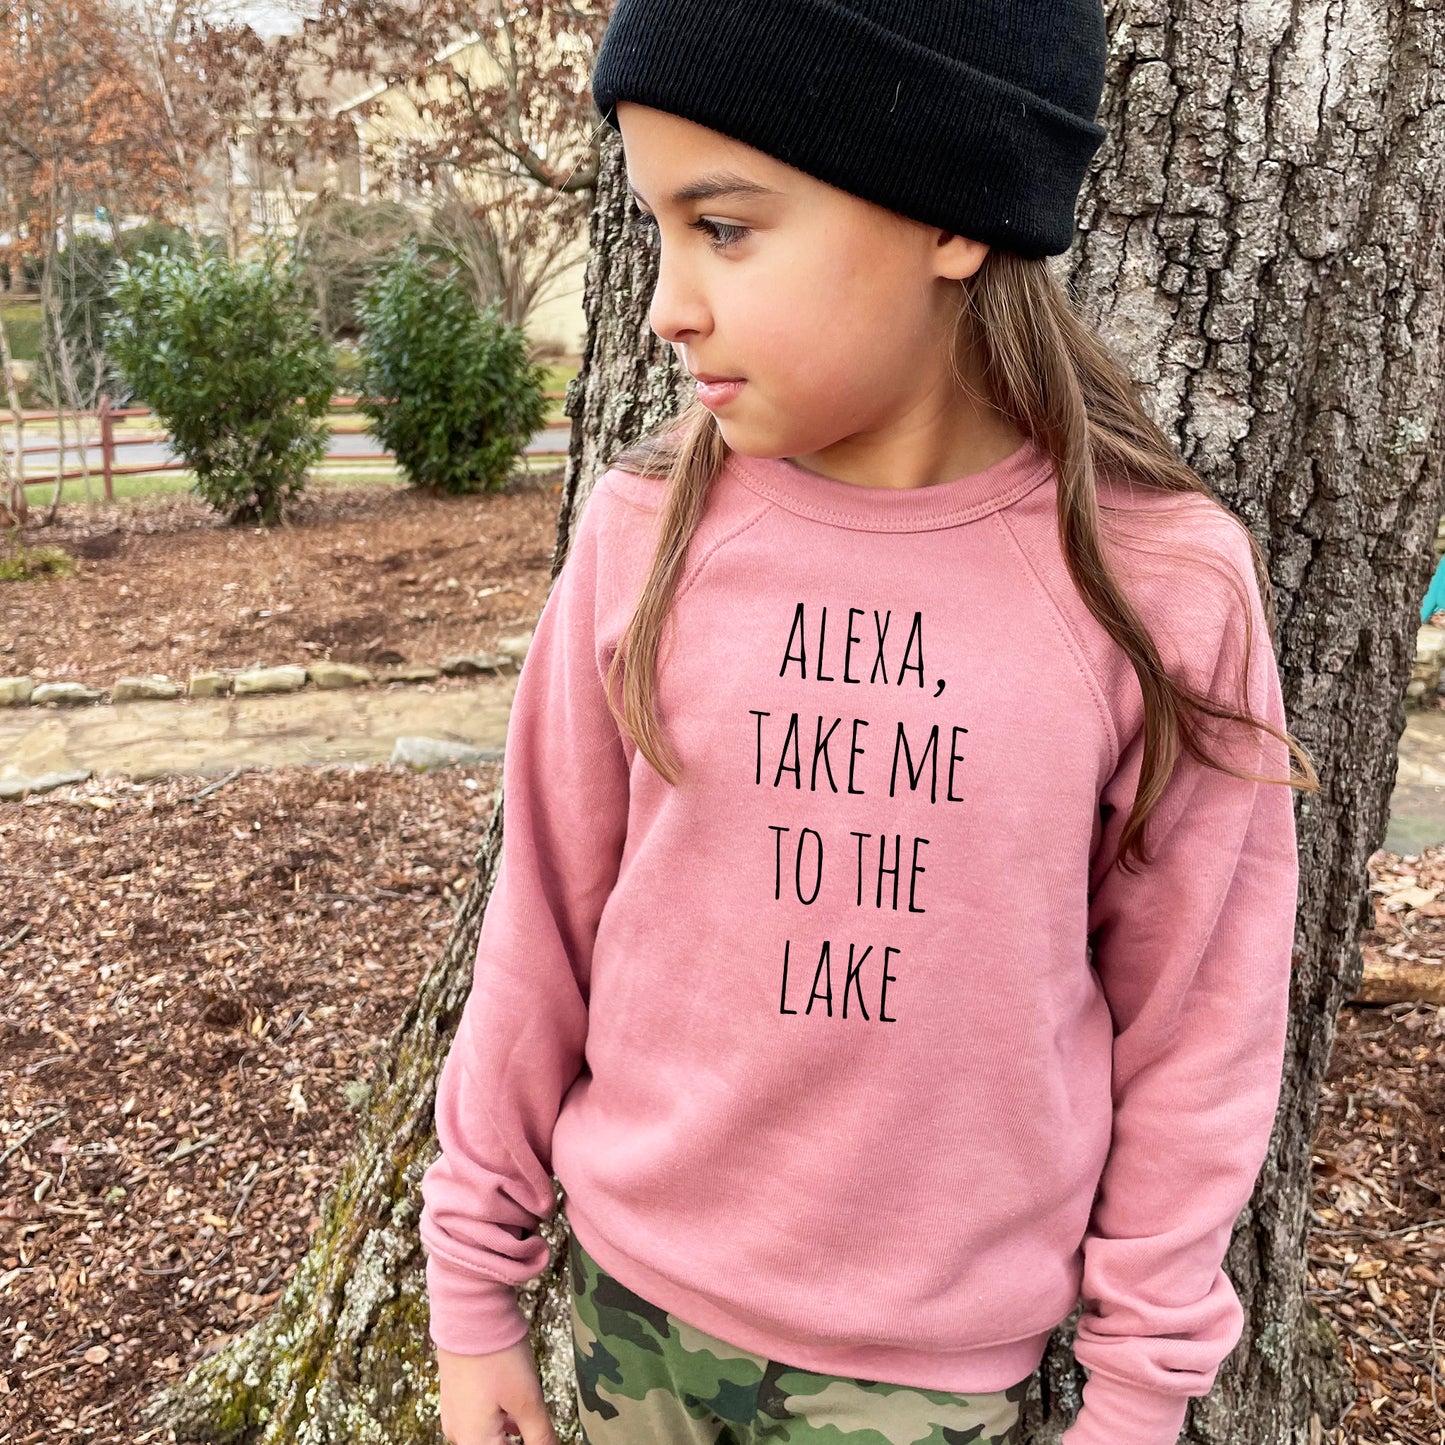 Alexa, Take Me To The Lake - Kid's Sweatshirt - Athletic Heather or Mauve